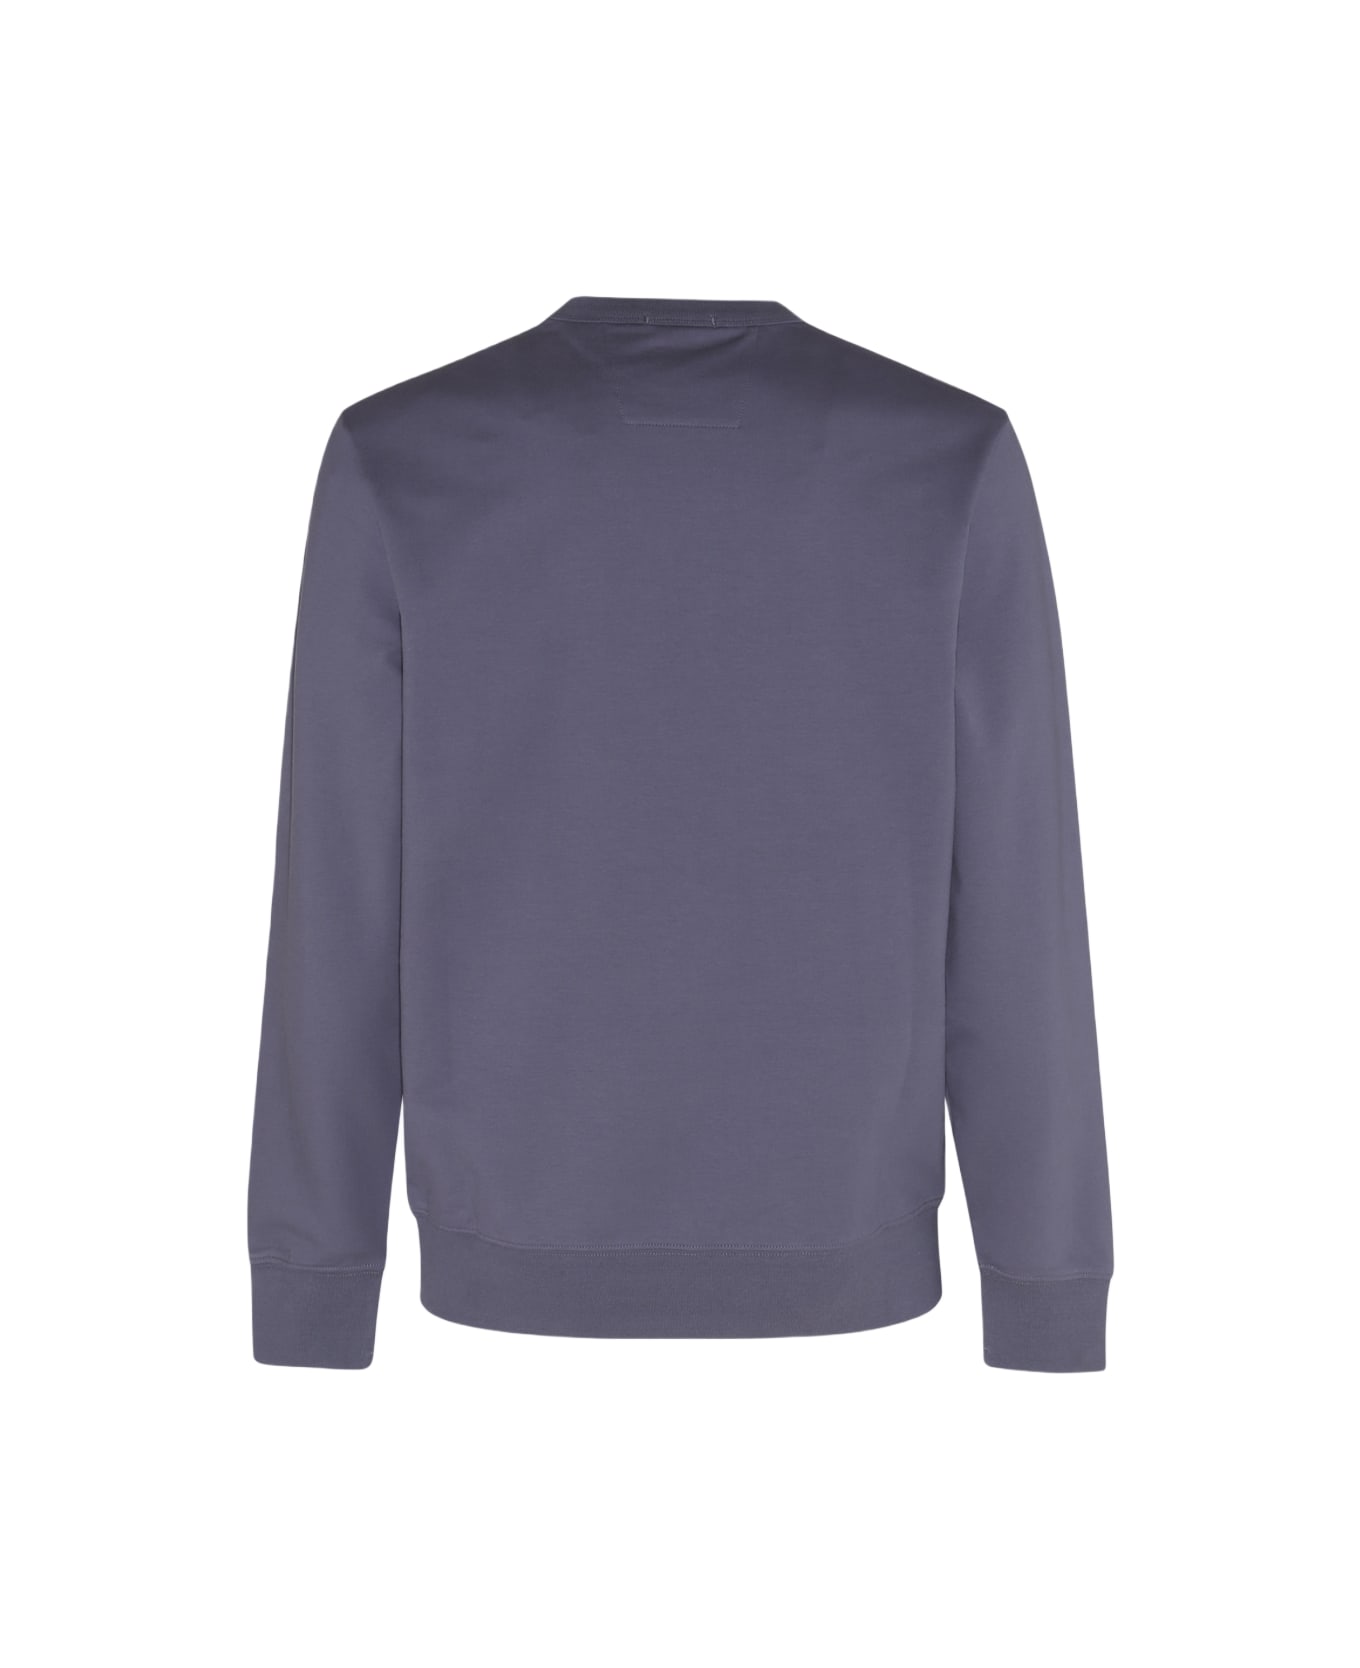 C.P. Company Ash Grey Cotton Metropolis Sweatshirt - BLUE/GREY フリース